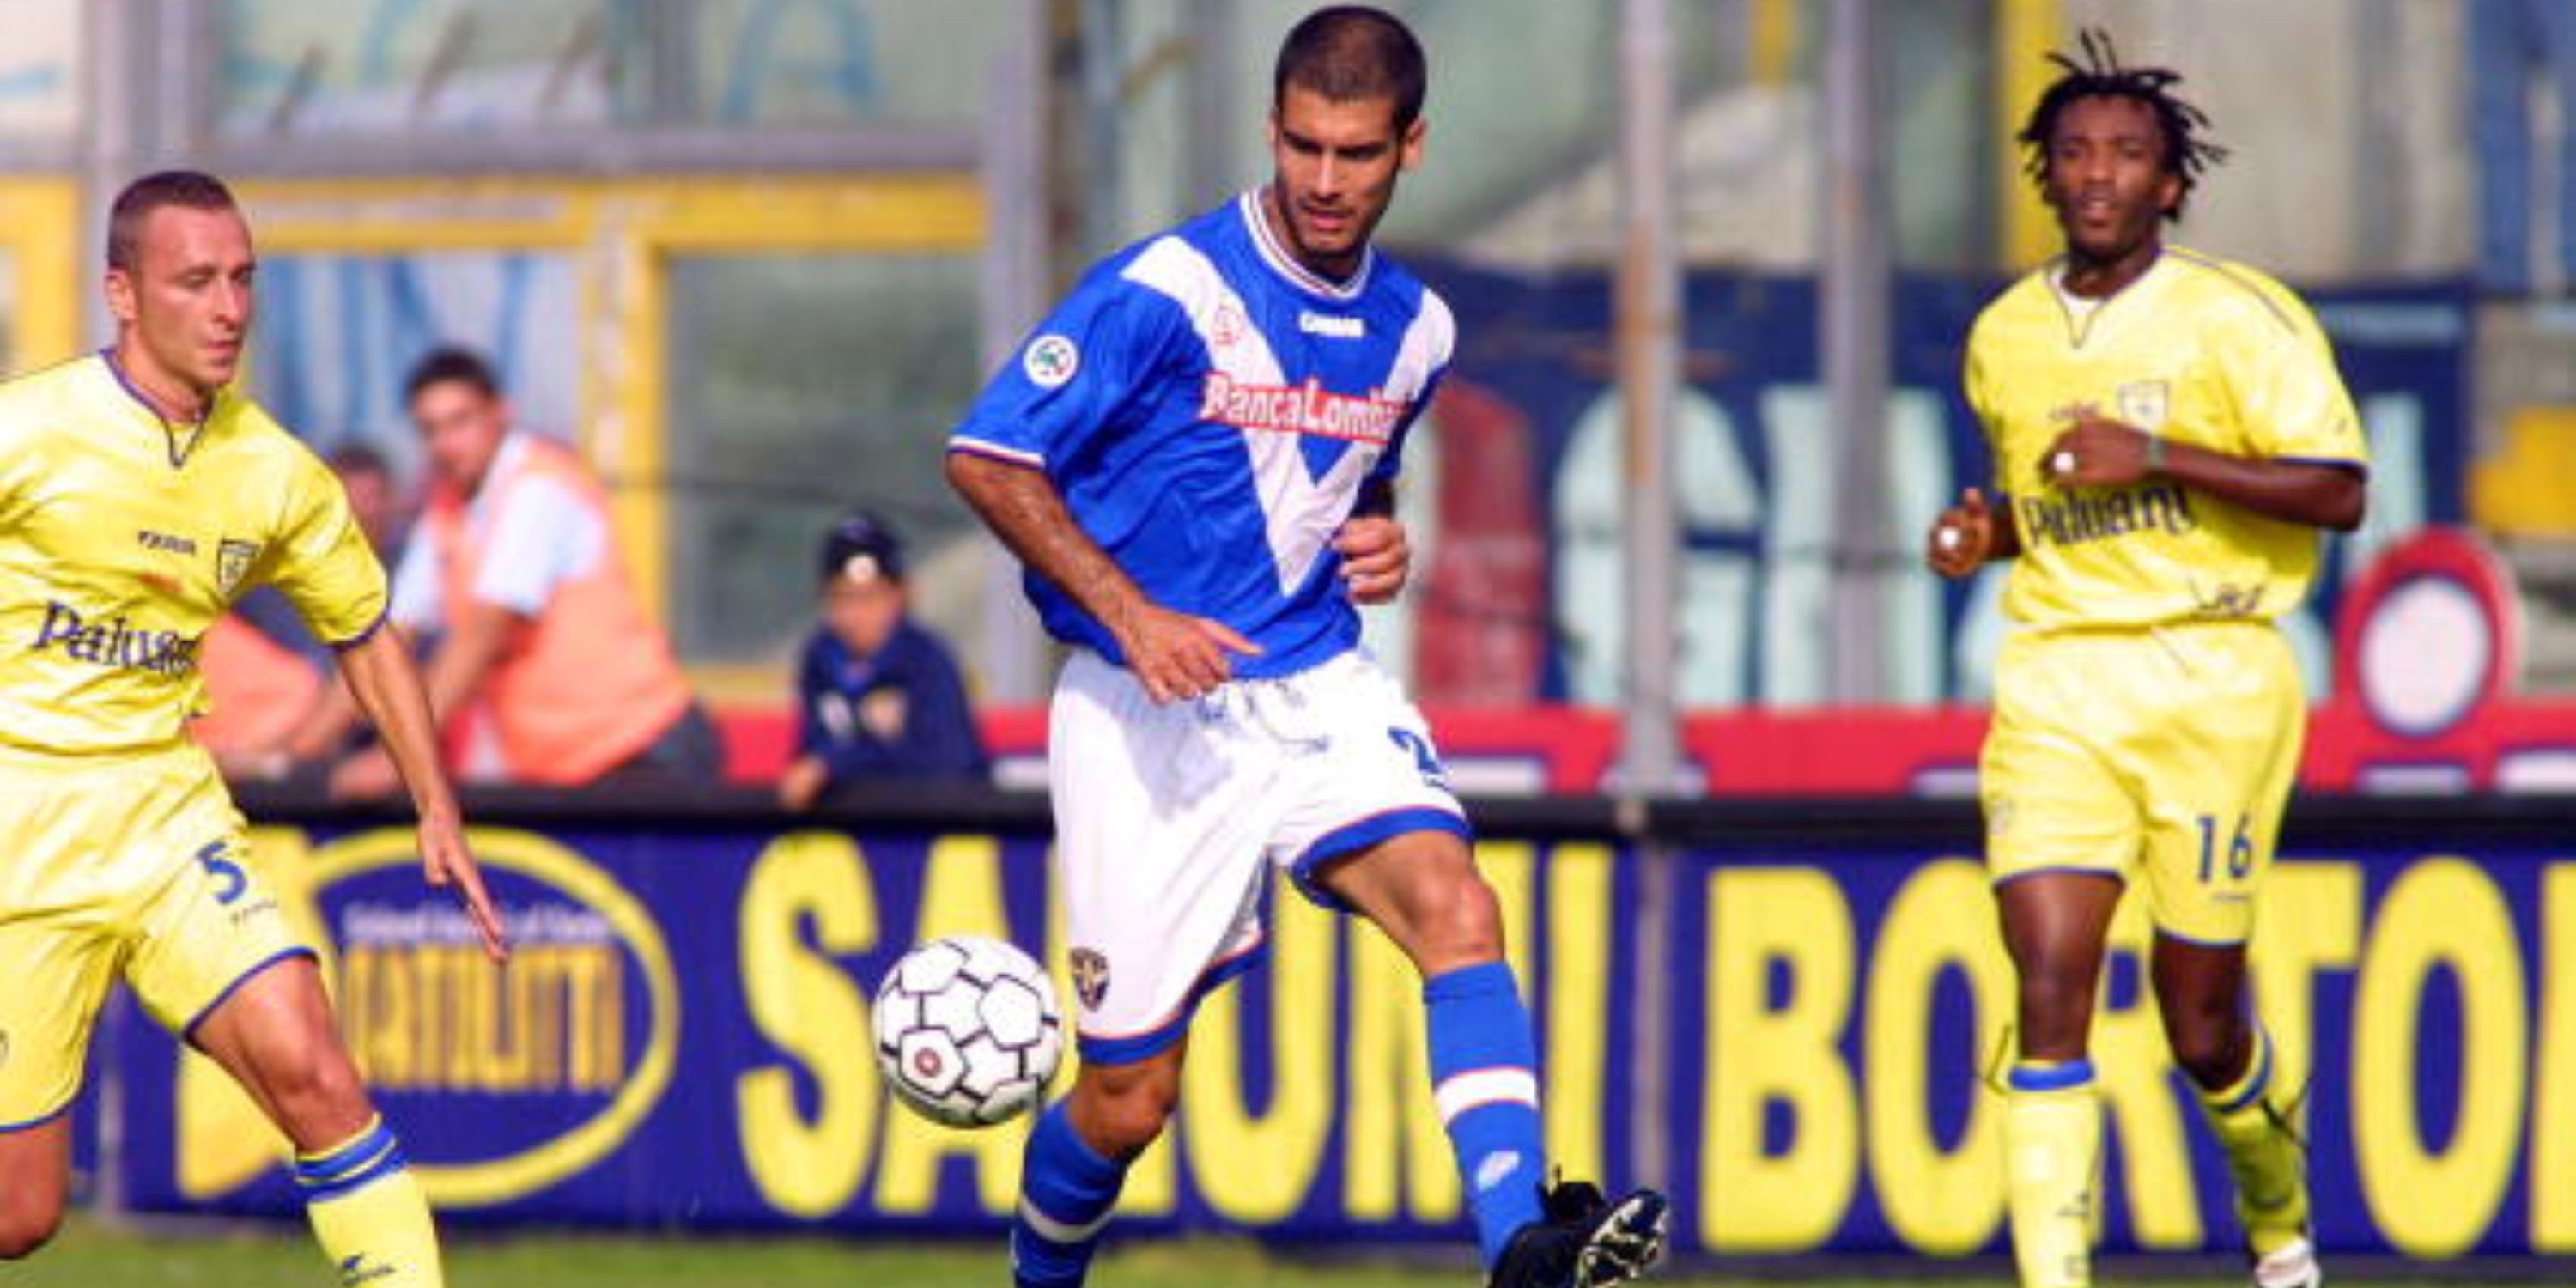 Pep Guardiola in action for Brescia